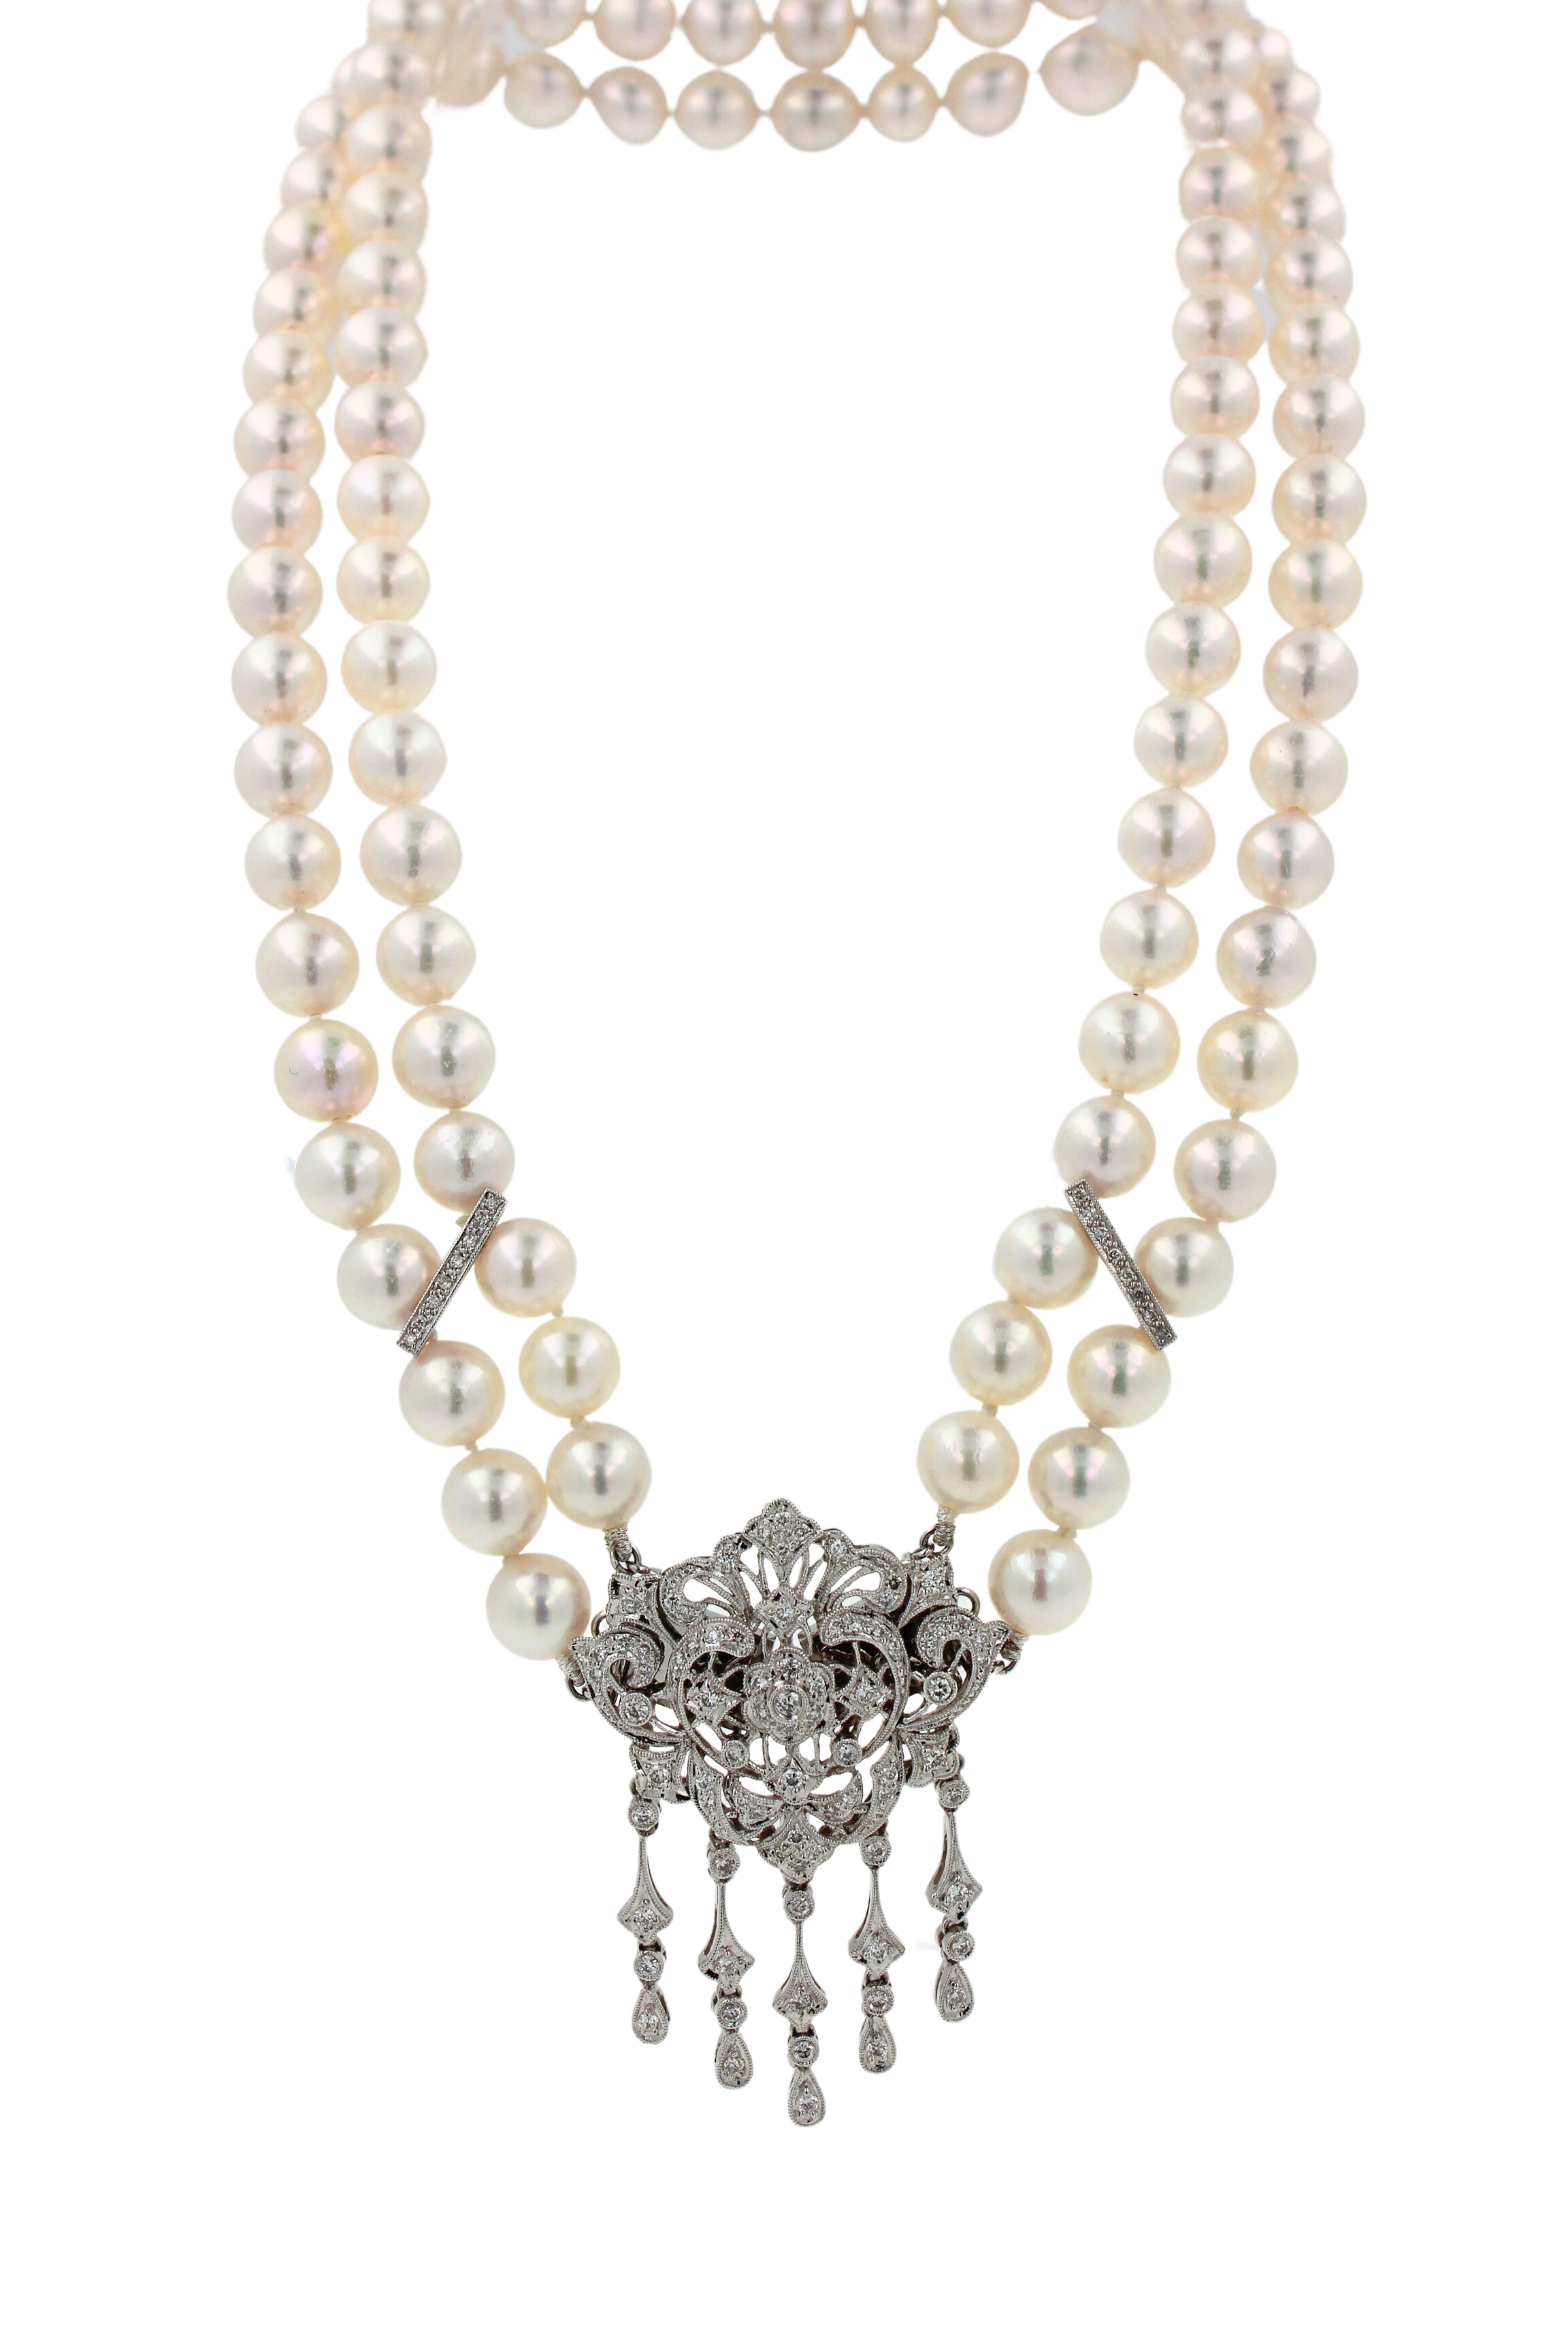 Combo collier, broche, perle Akoya japonaise blanche, diamant et or blanc 18 carats